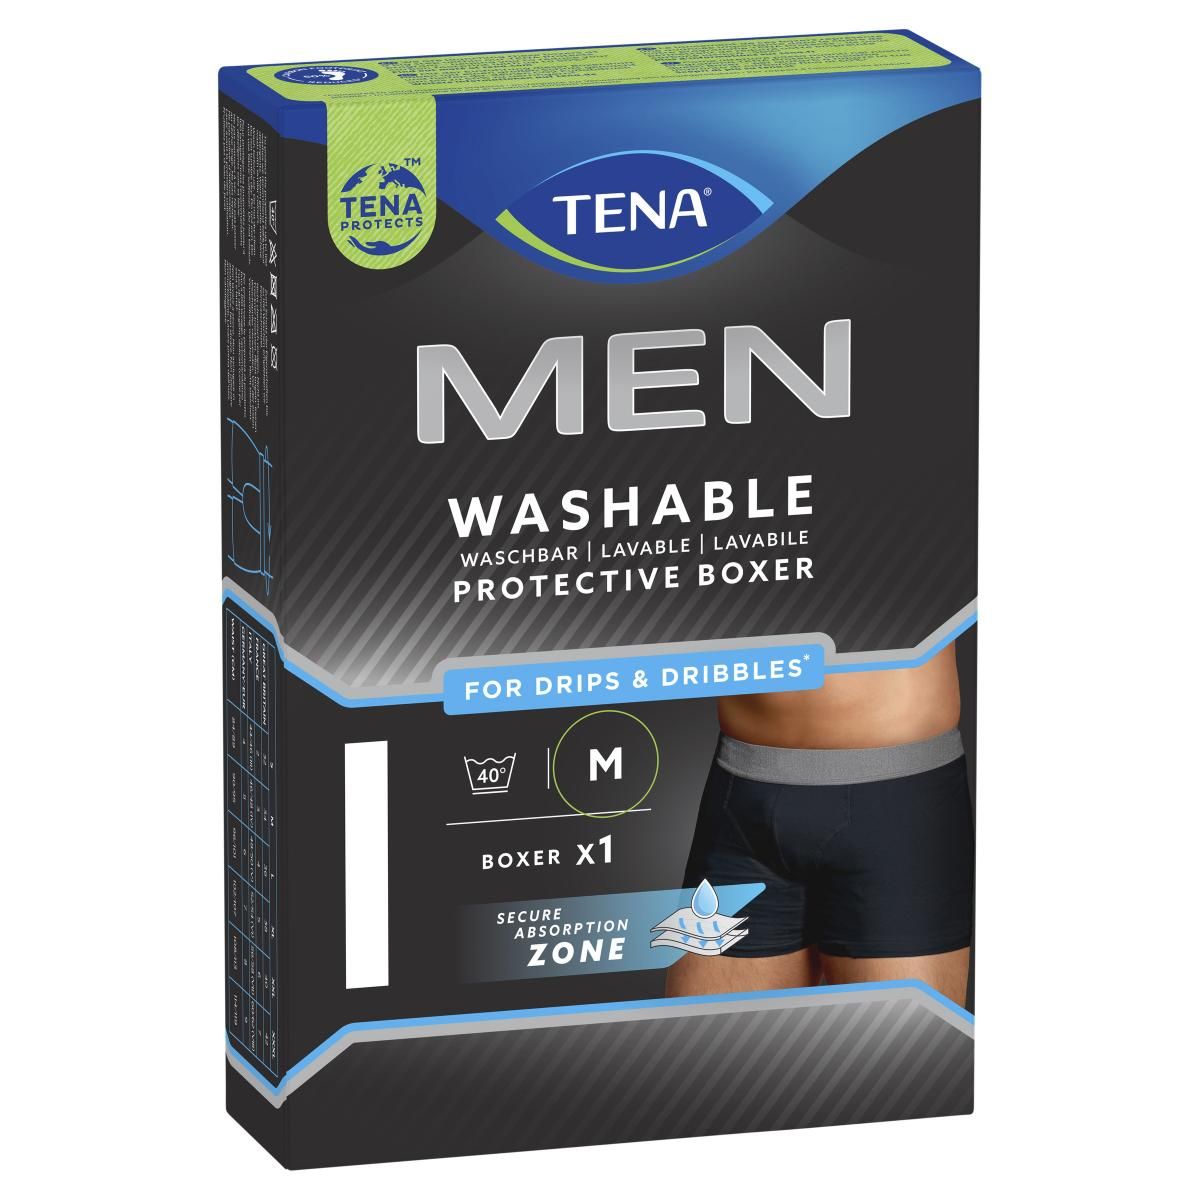 Buy Tena Men Pads Level 3 8 Pack Online at Chemist Warehouse®